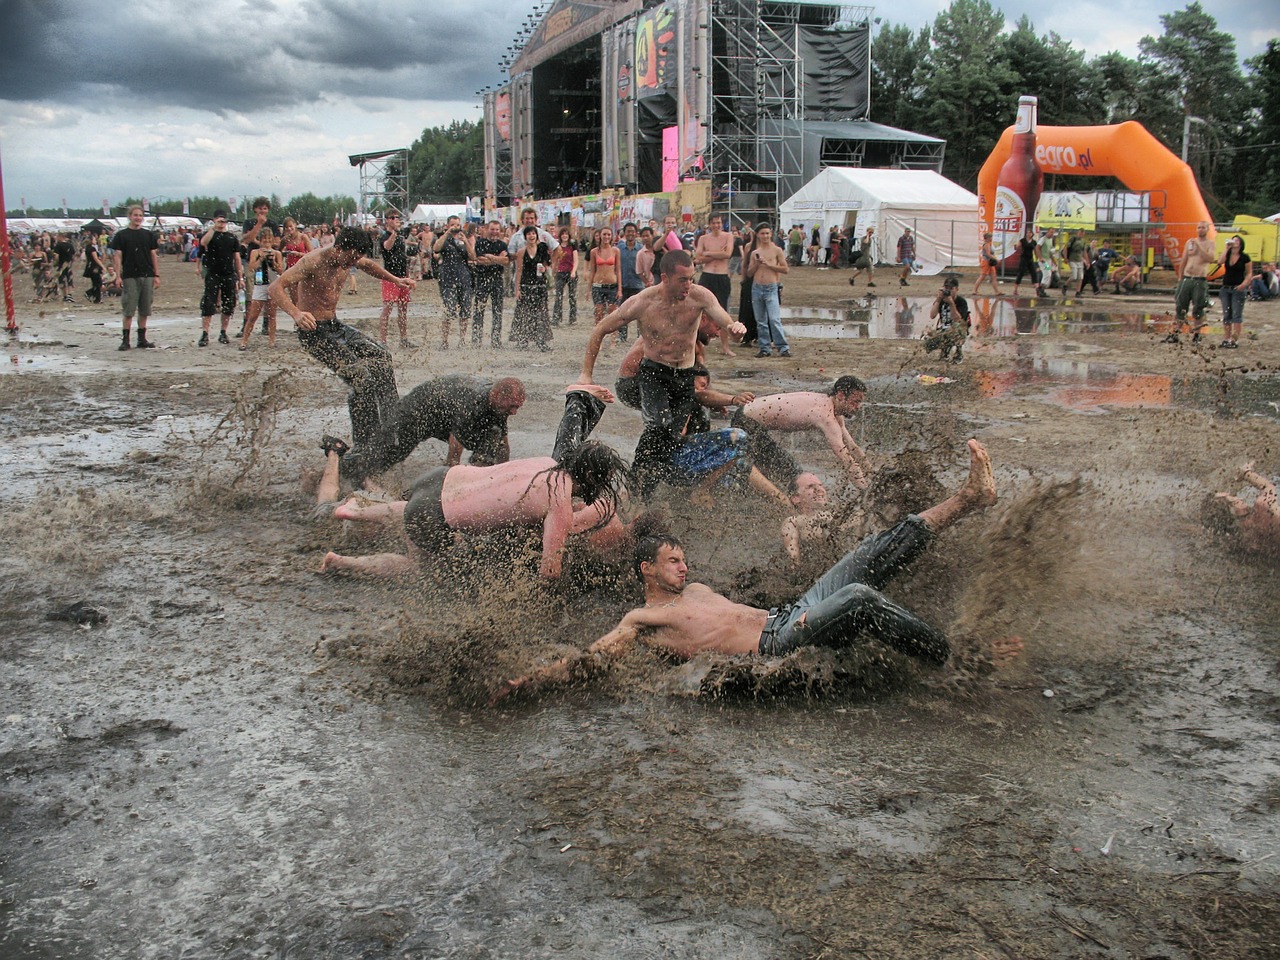 Download free photo of Mud,rain,puddle,dirty,fun muddy - from needpix.com